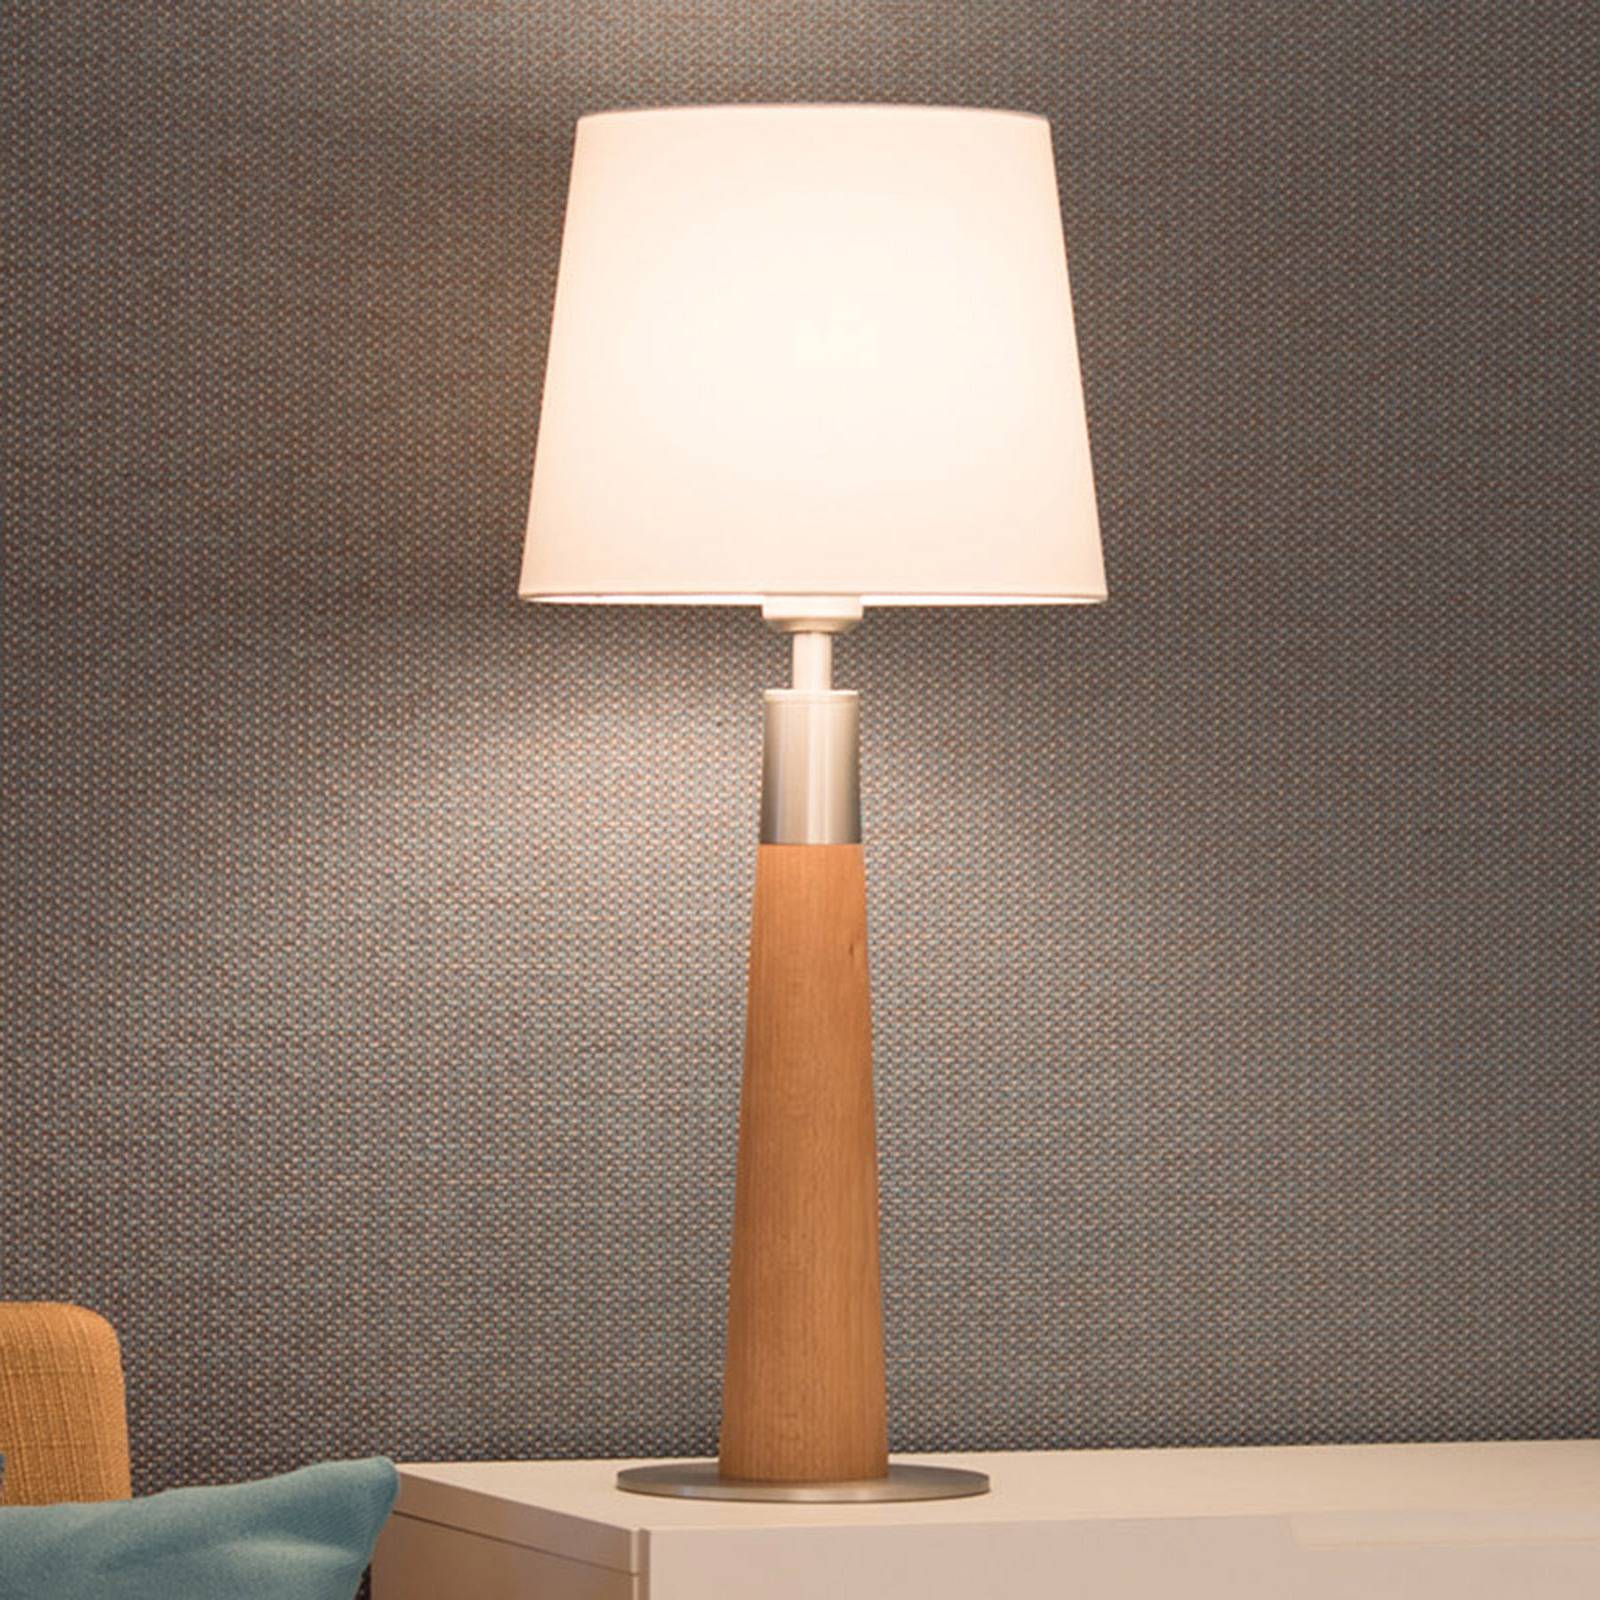 Image of HerzBlut Conico lampe blanche, chêne huilé, 58 cm 4021273016228